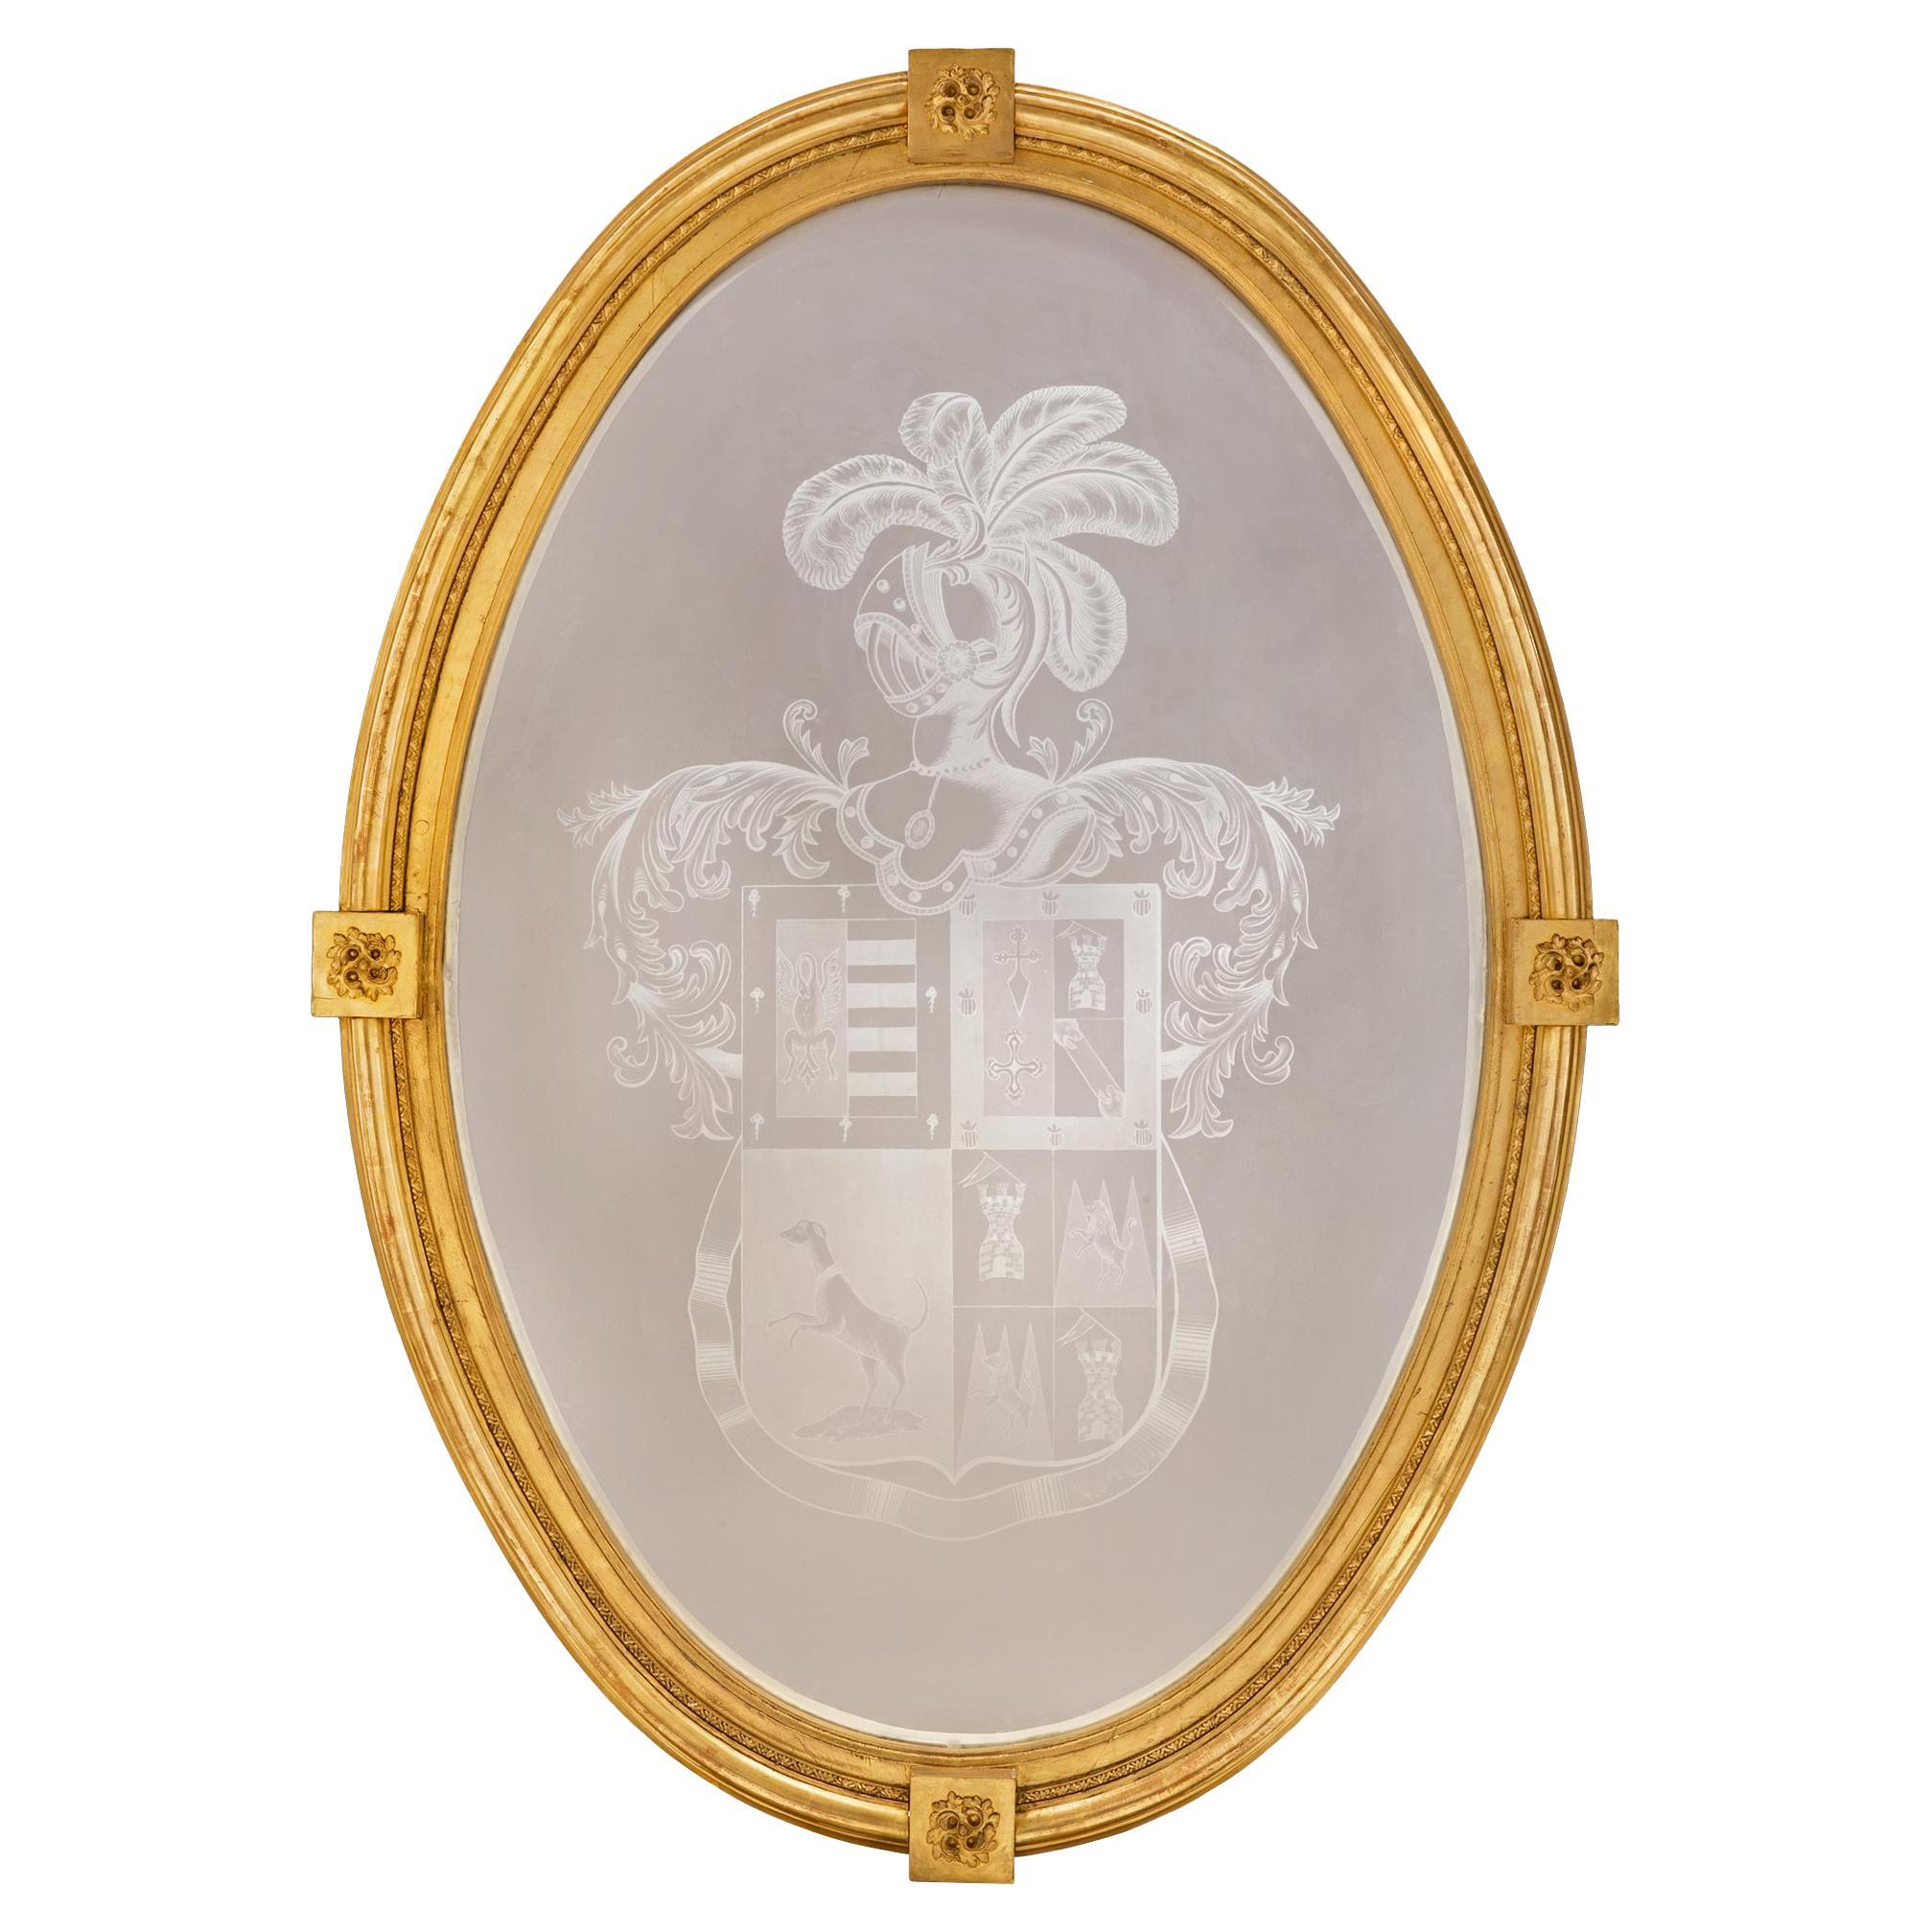 Italian 19th Century Etched Glass Family Crest Signed J. Prat. Colon 7